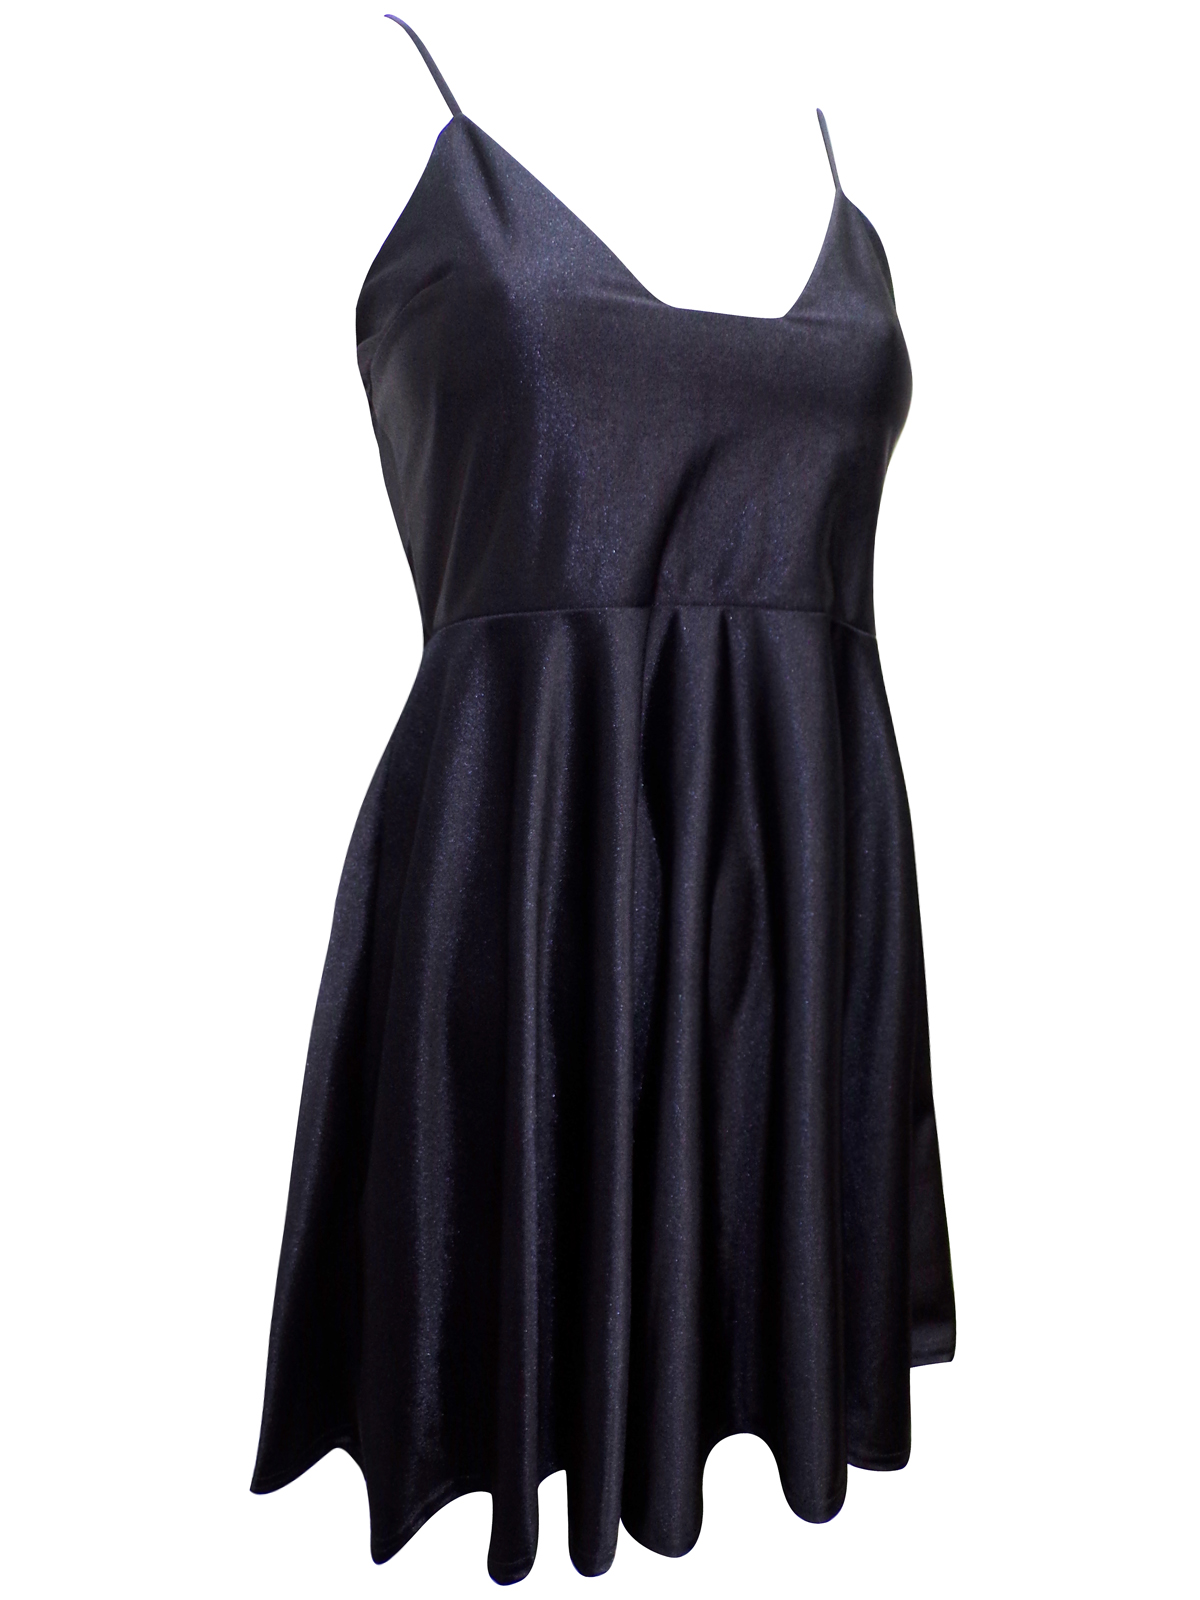 BOOHOO - - B00H00 BLACK Strappy Satin Babydoll Dress - Size 10 to 14